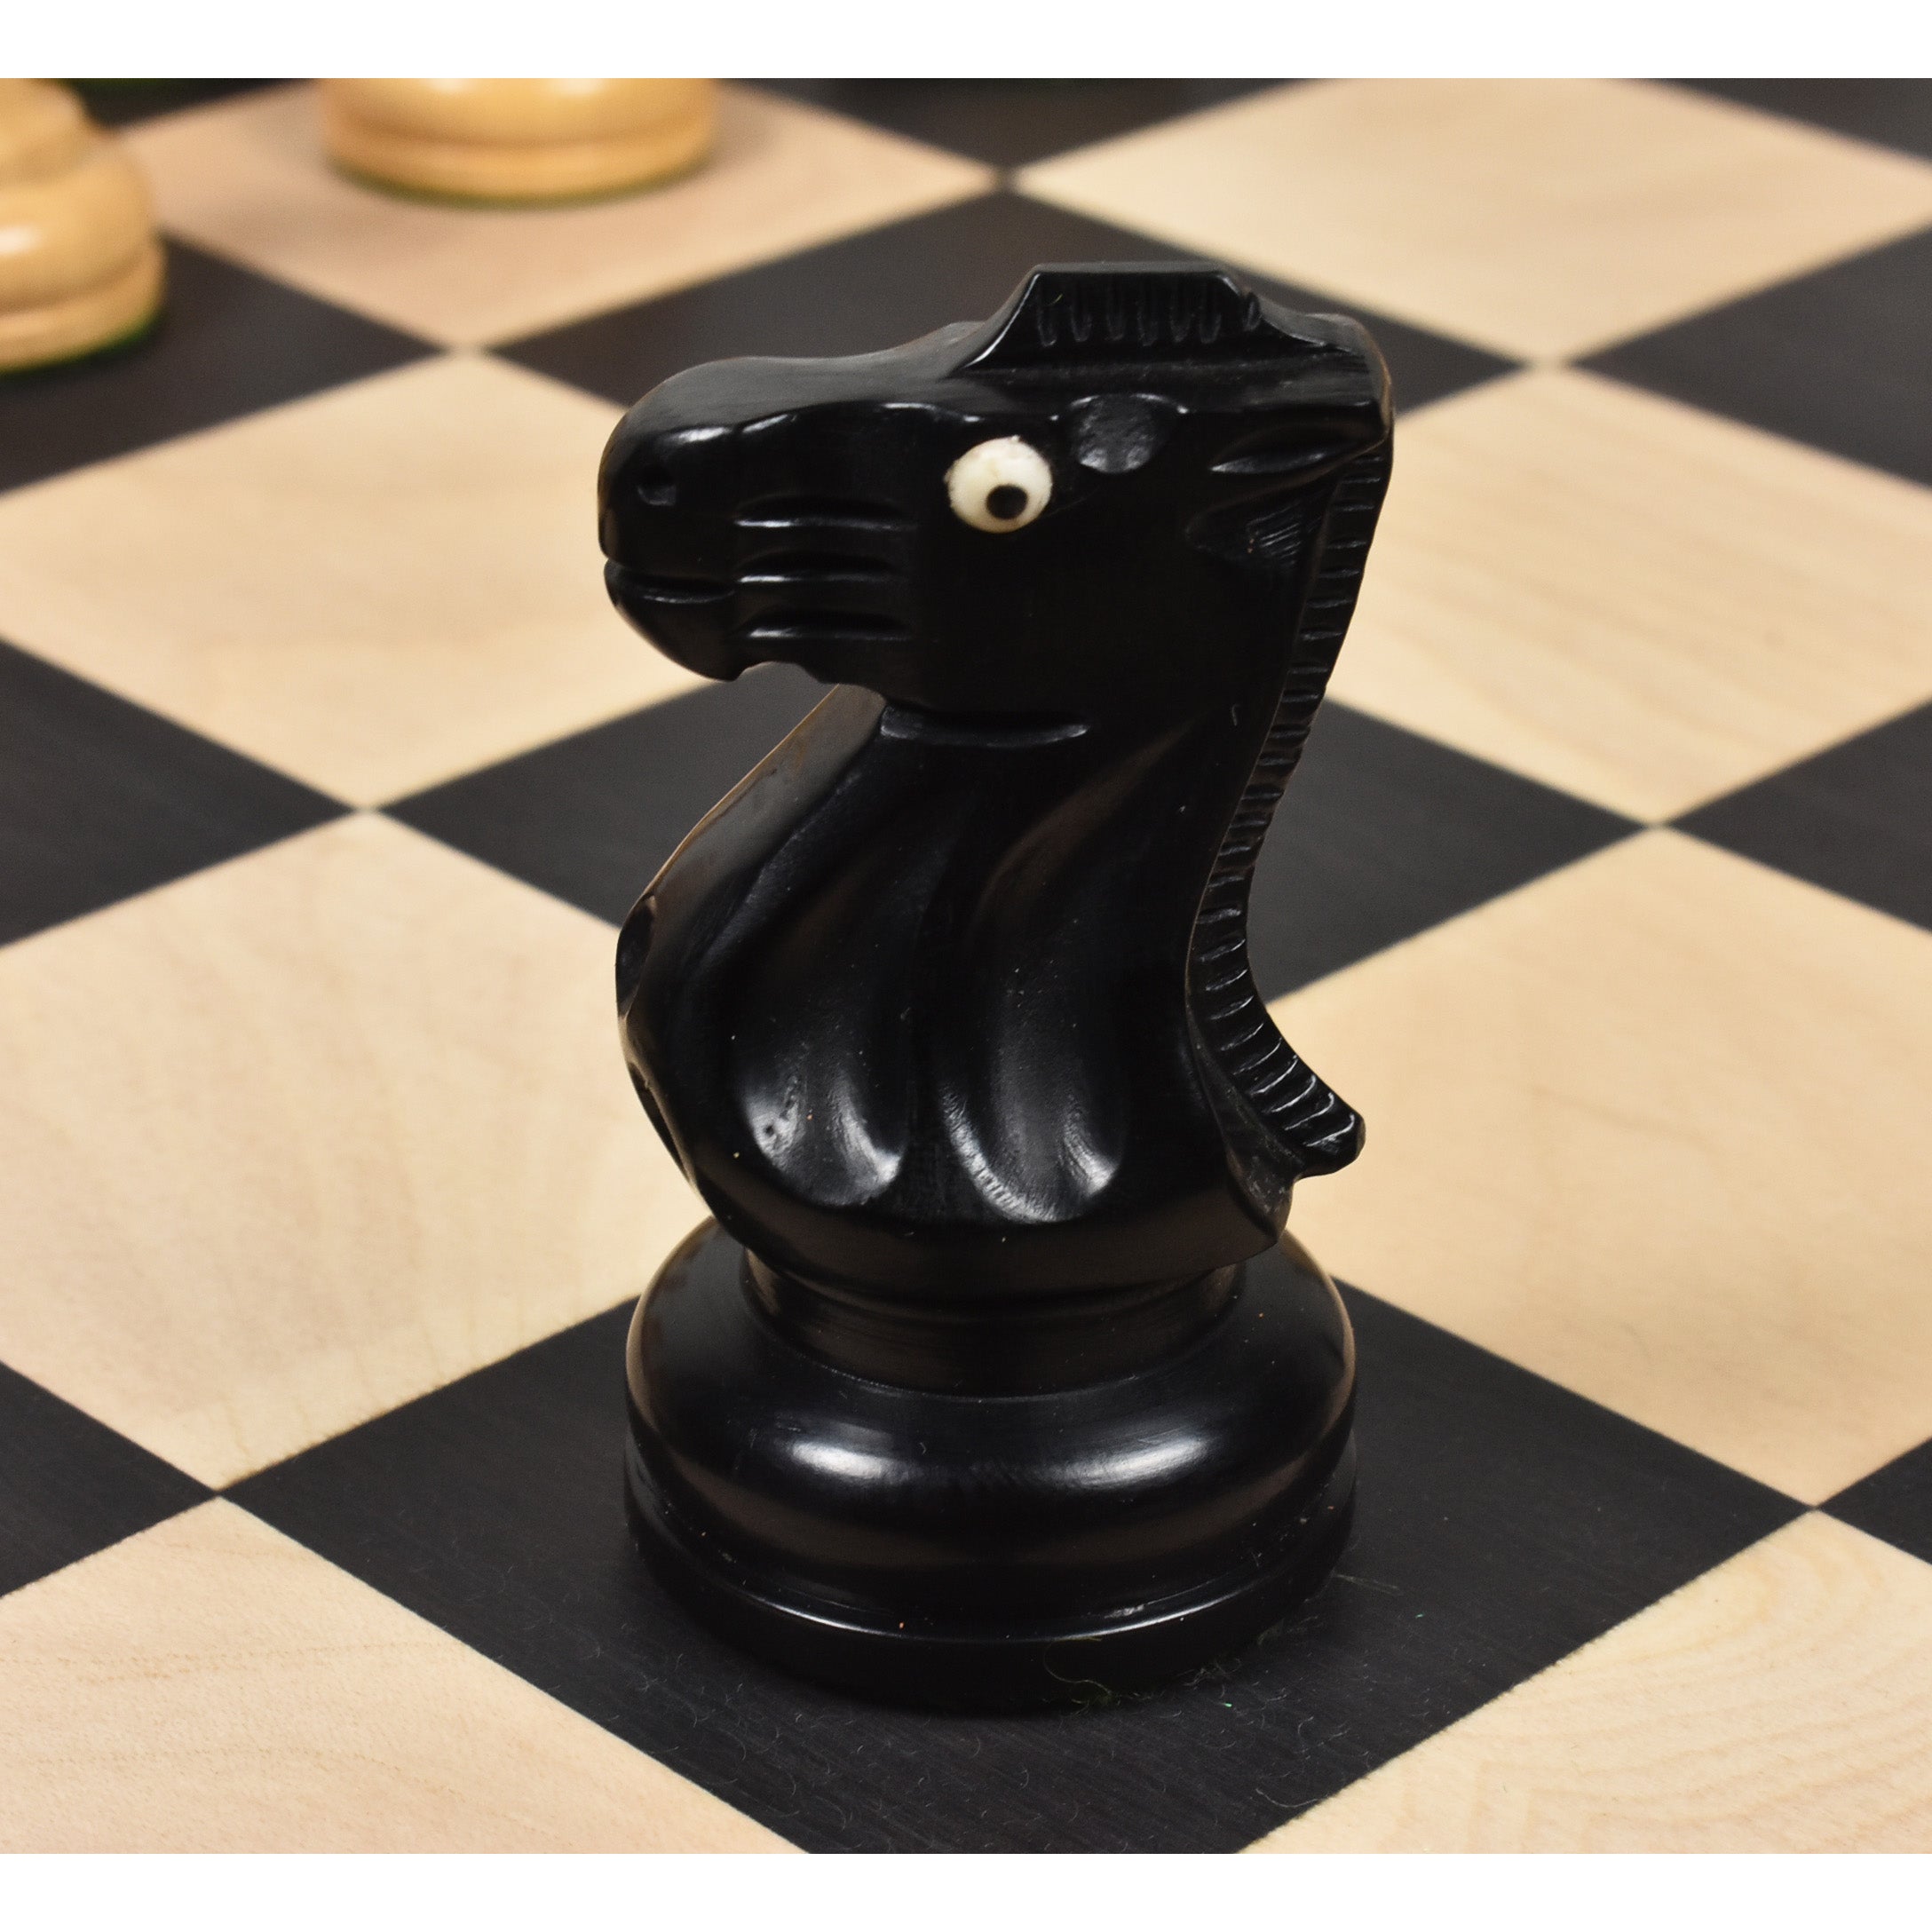 Medium 3 Player Chess Set - #163 - George & Co.